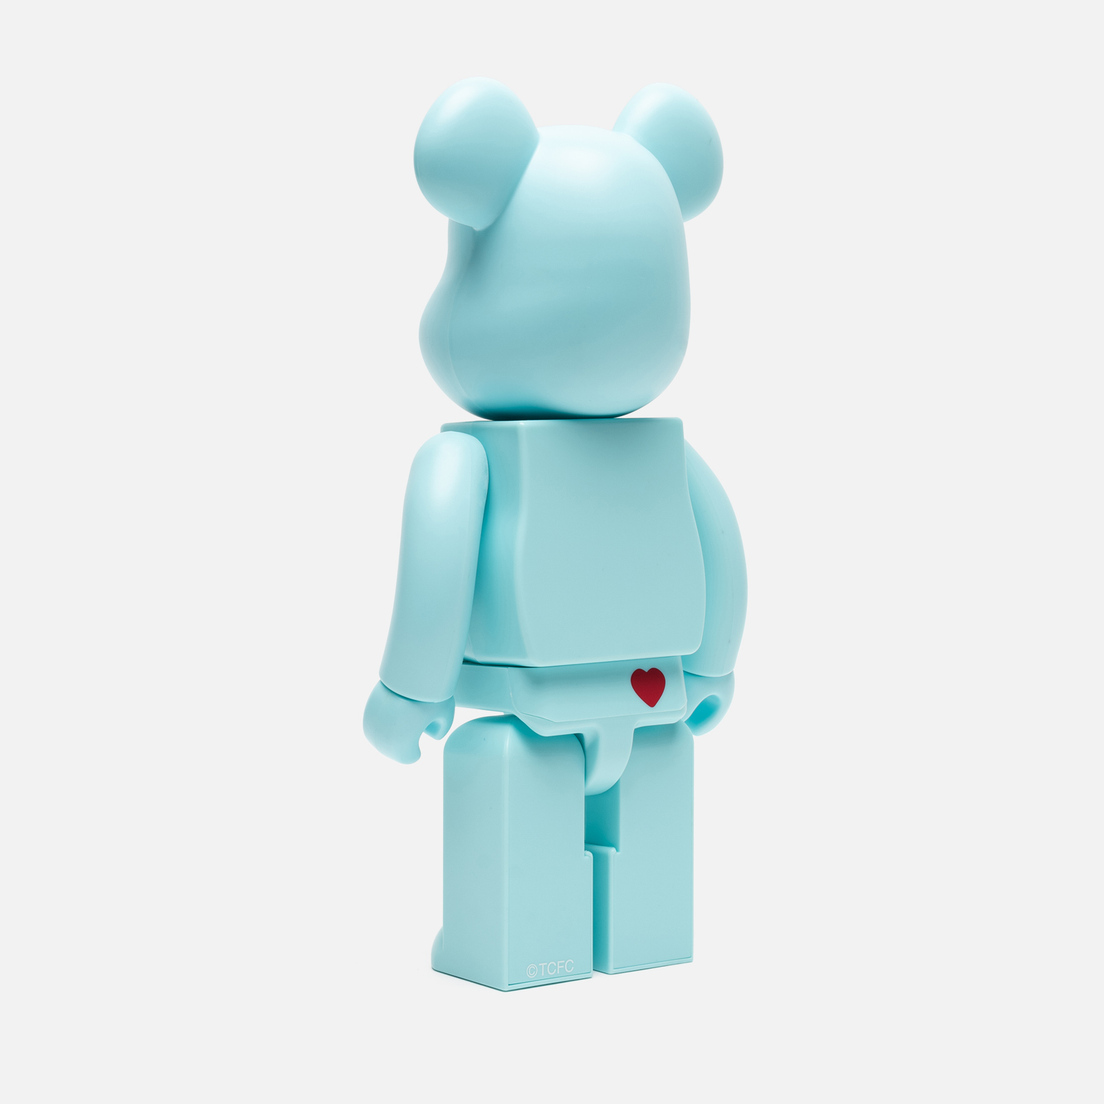 Medicom Toy Игрушка Bearbrick Bedtime Bear 400%